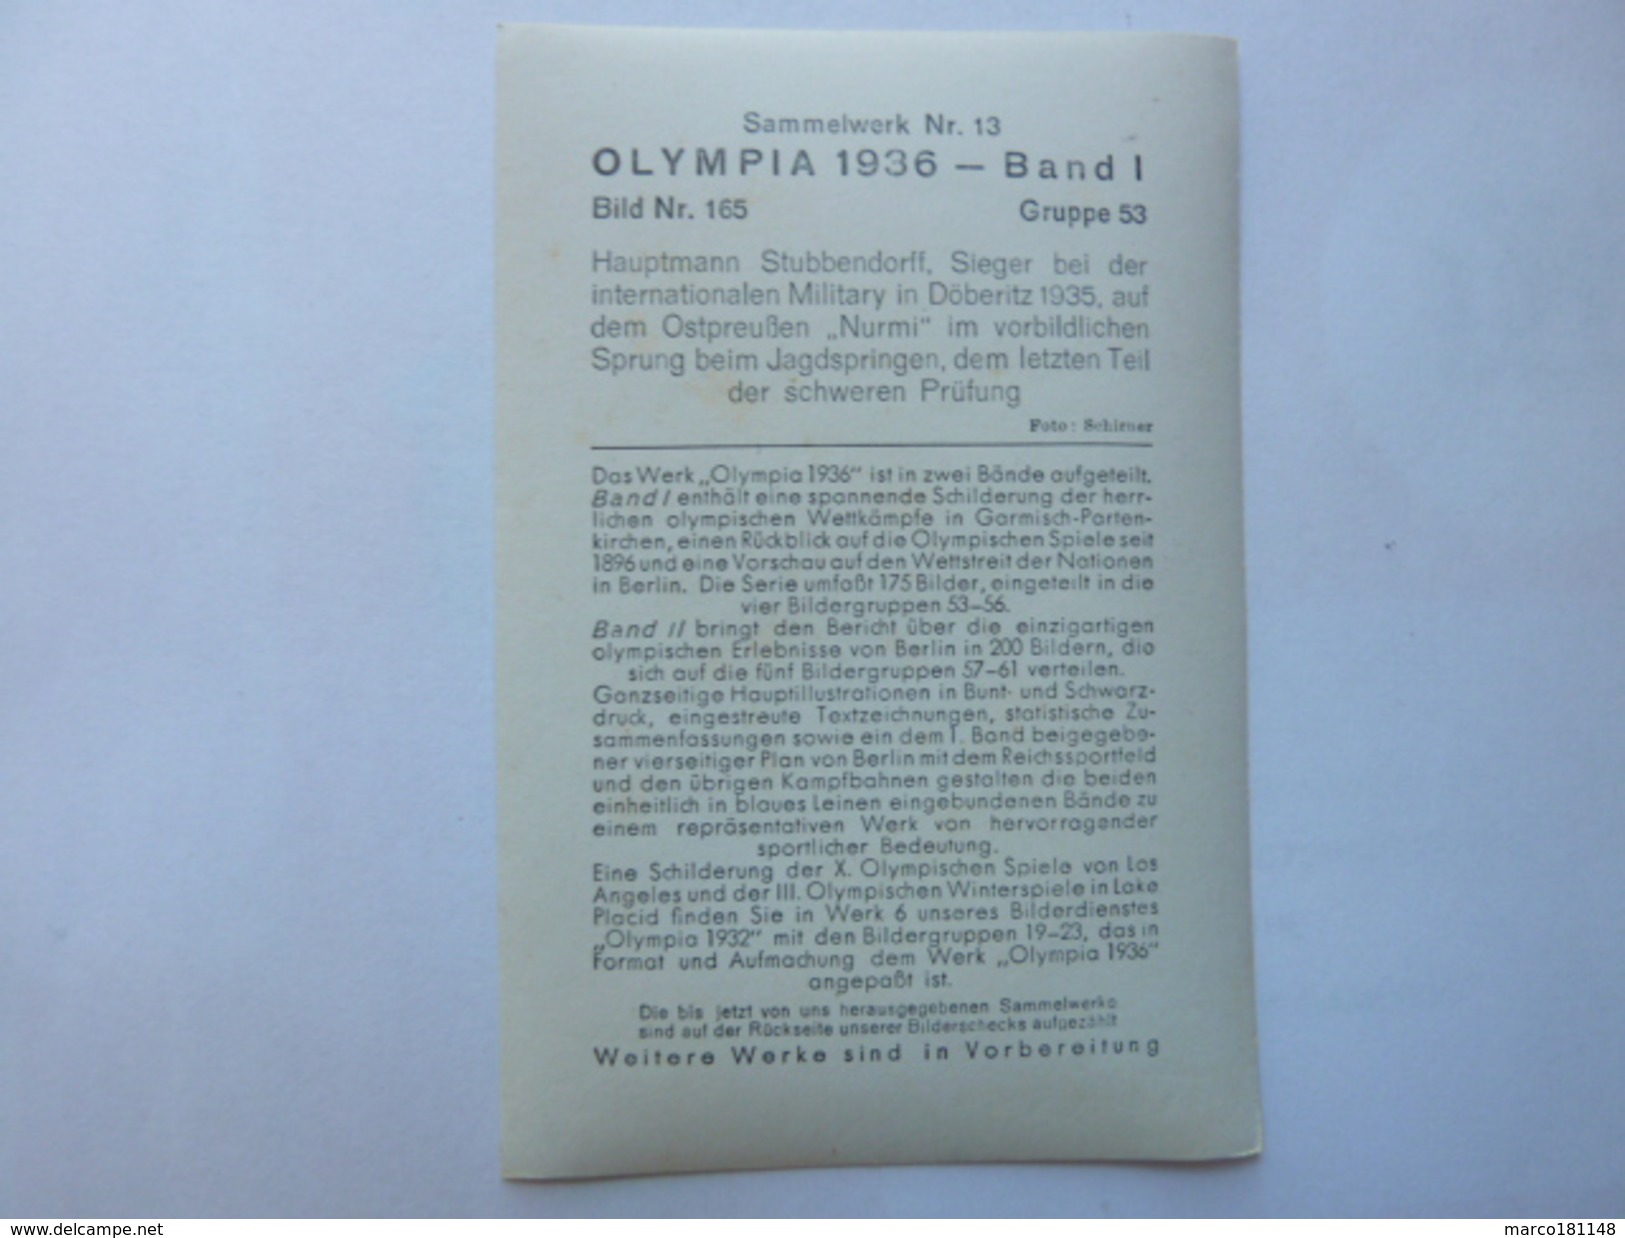 OLYMPIA 1936 - Band 1 - Bild Nr 165 Gruppe 53 - Hauptmann Stubbendorff - Sport